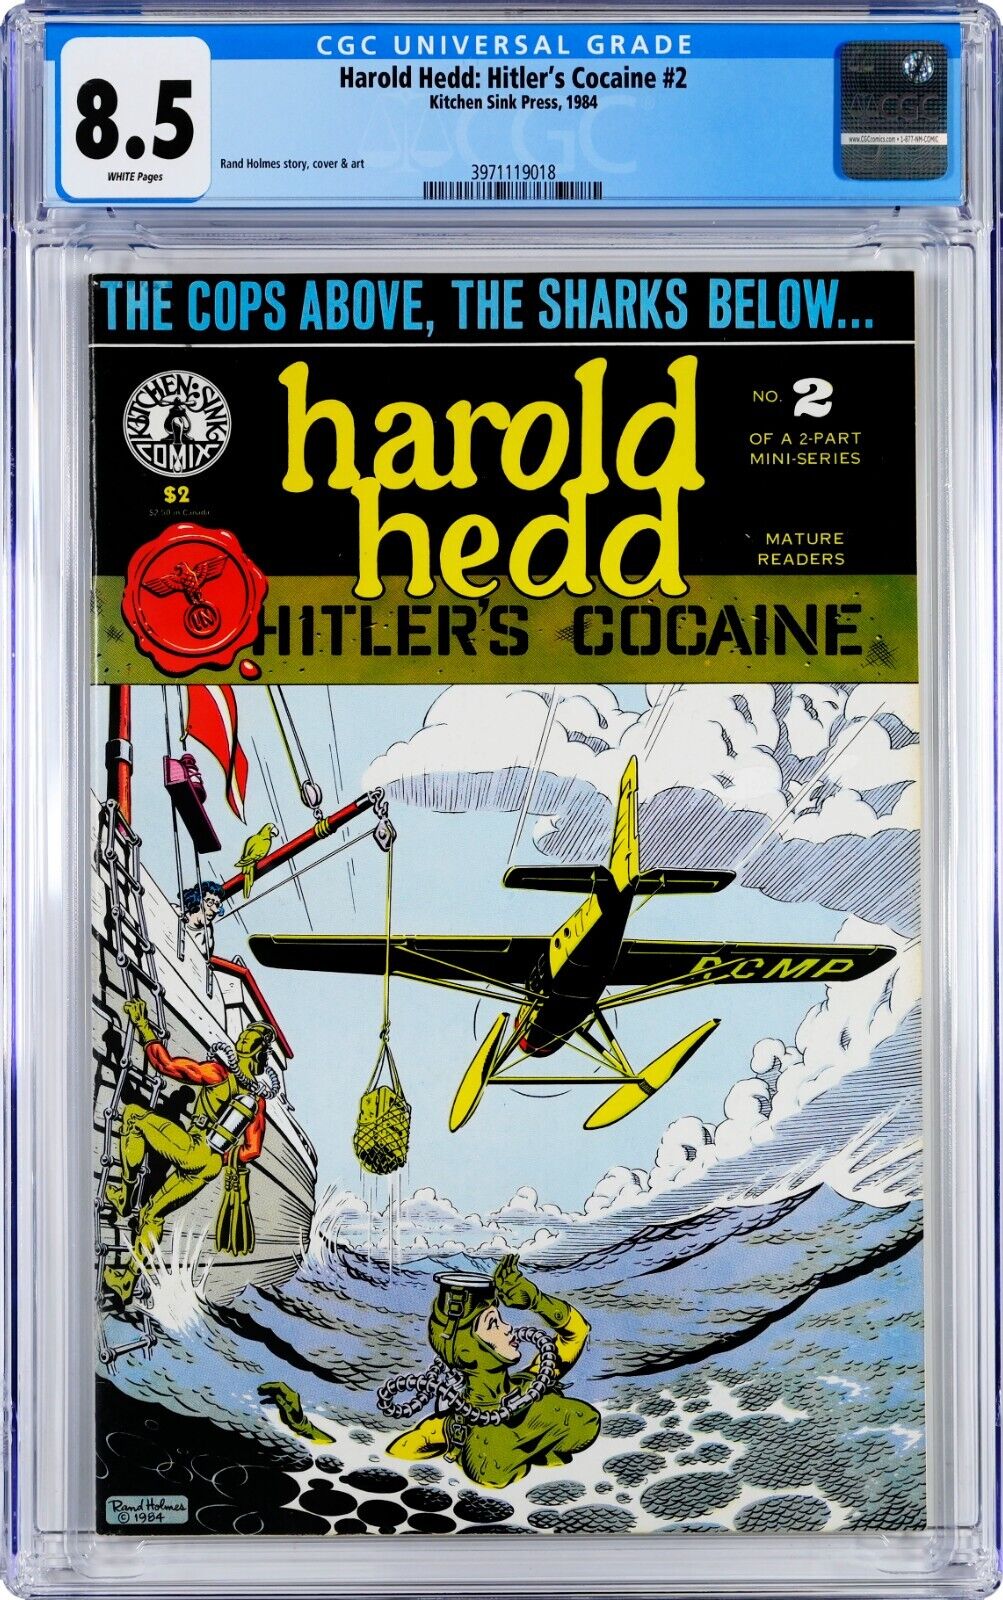 Harold Hedd: Hitler's Cocaine #2 CGC 8.5 (1984, Kitchen Sink Press) Rand Holmes